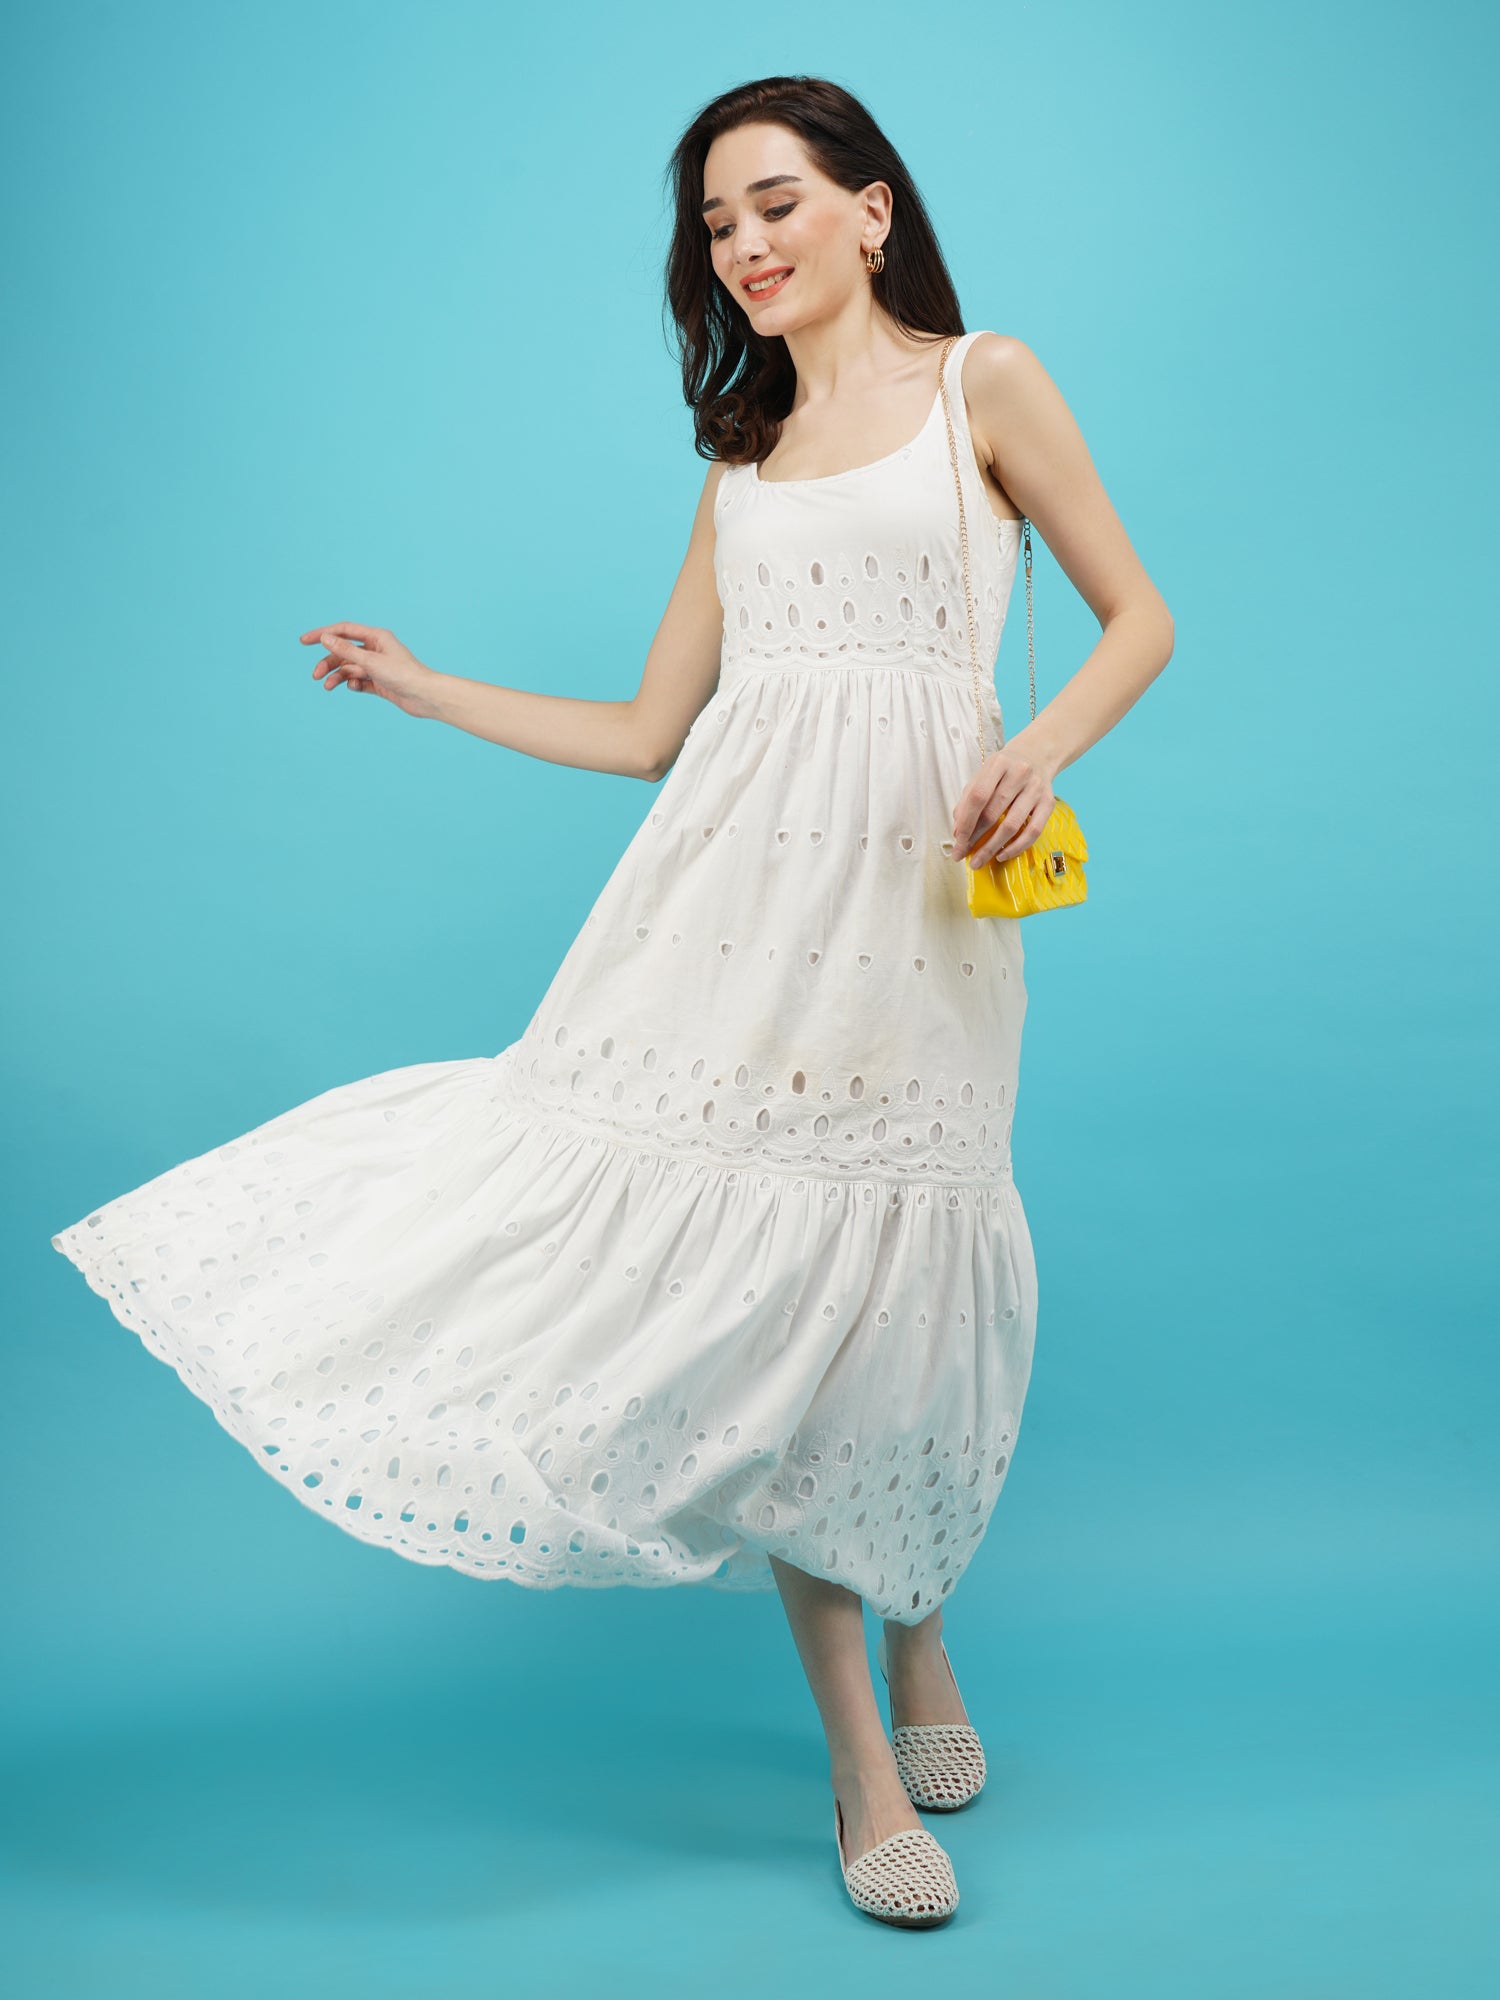 White Strappy Maxi Dress